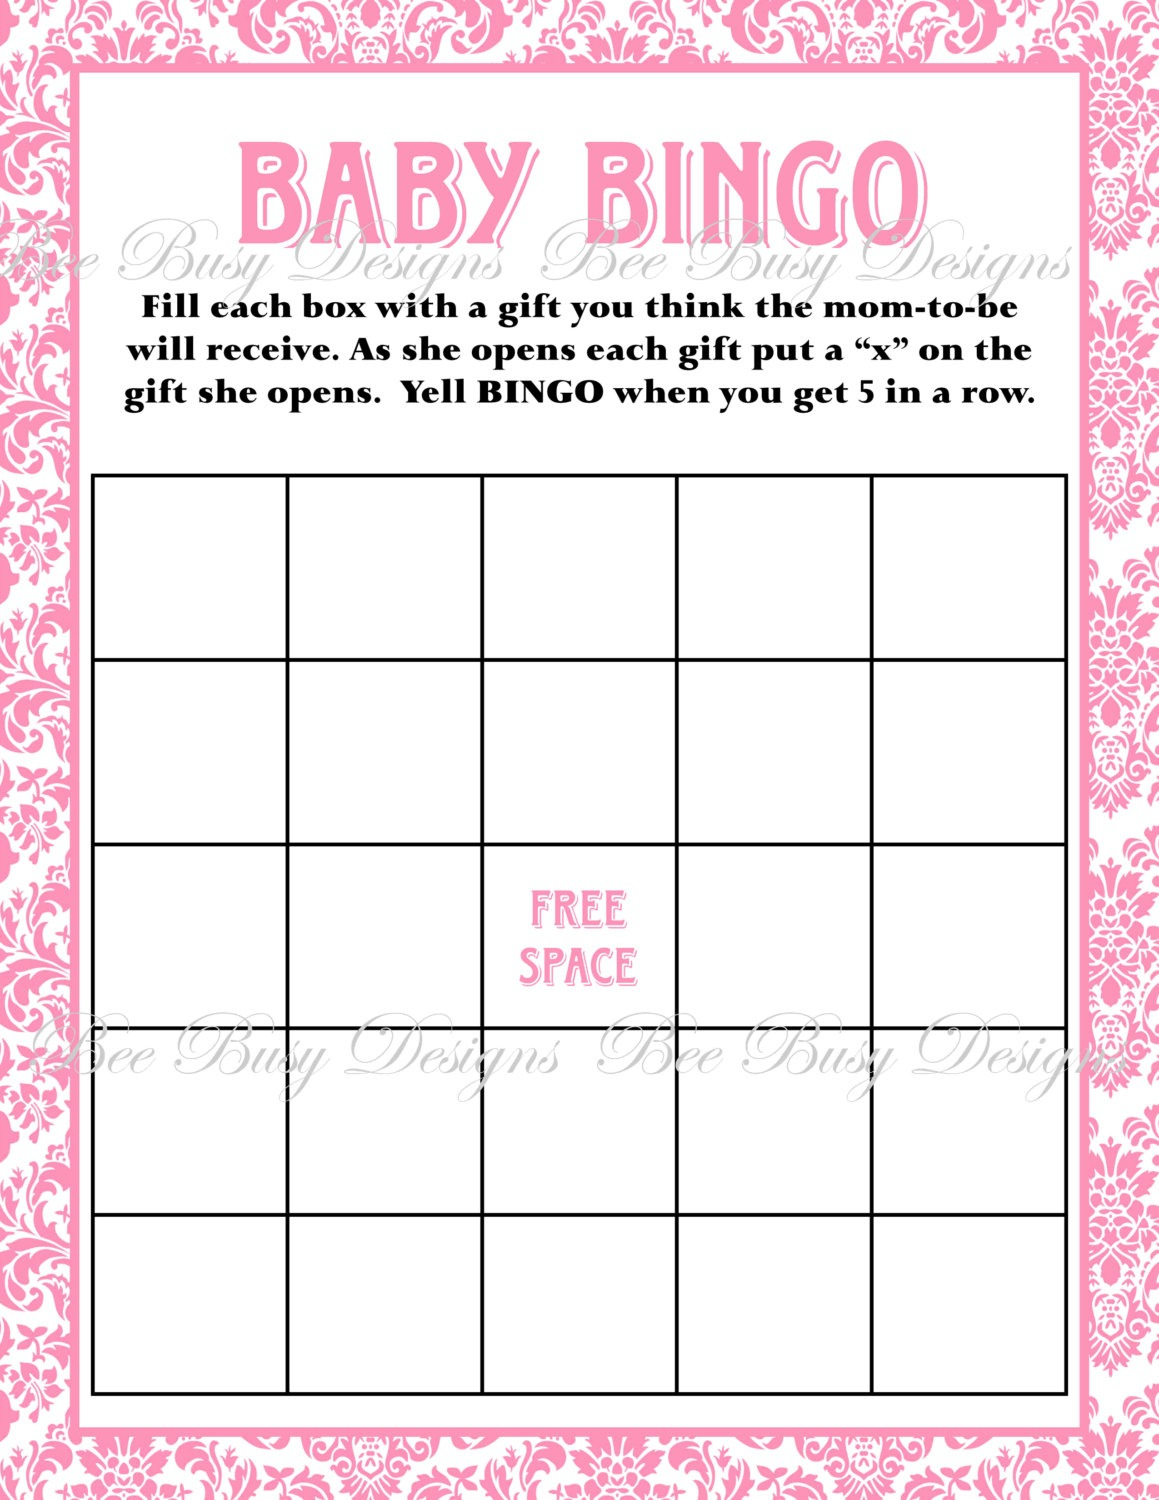 Printable Pink Damask Baby Shower Bingo Game | Bee Busy Designs - Free Printable Baby Shower Bingo